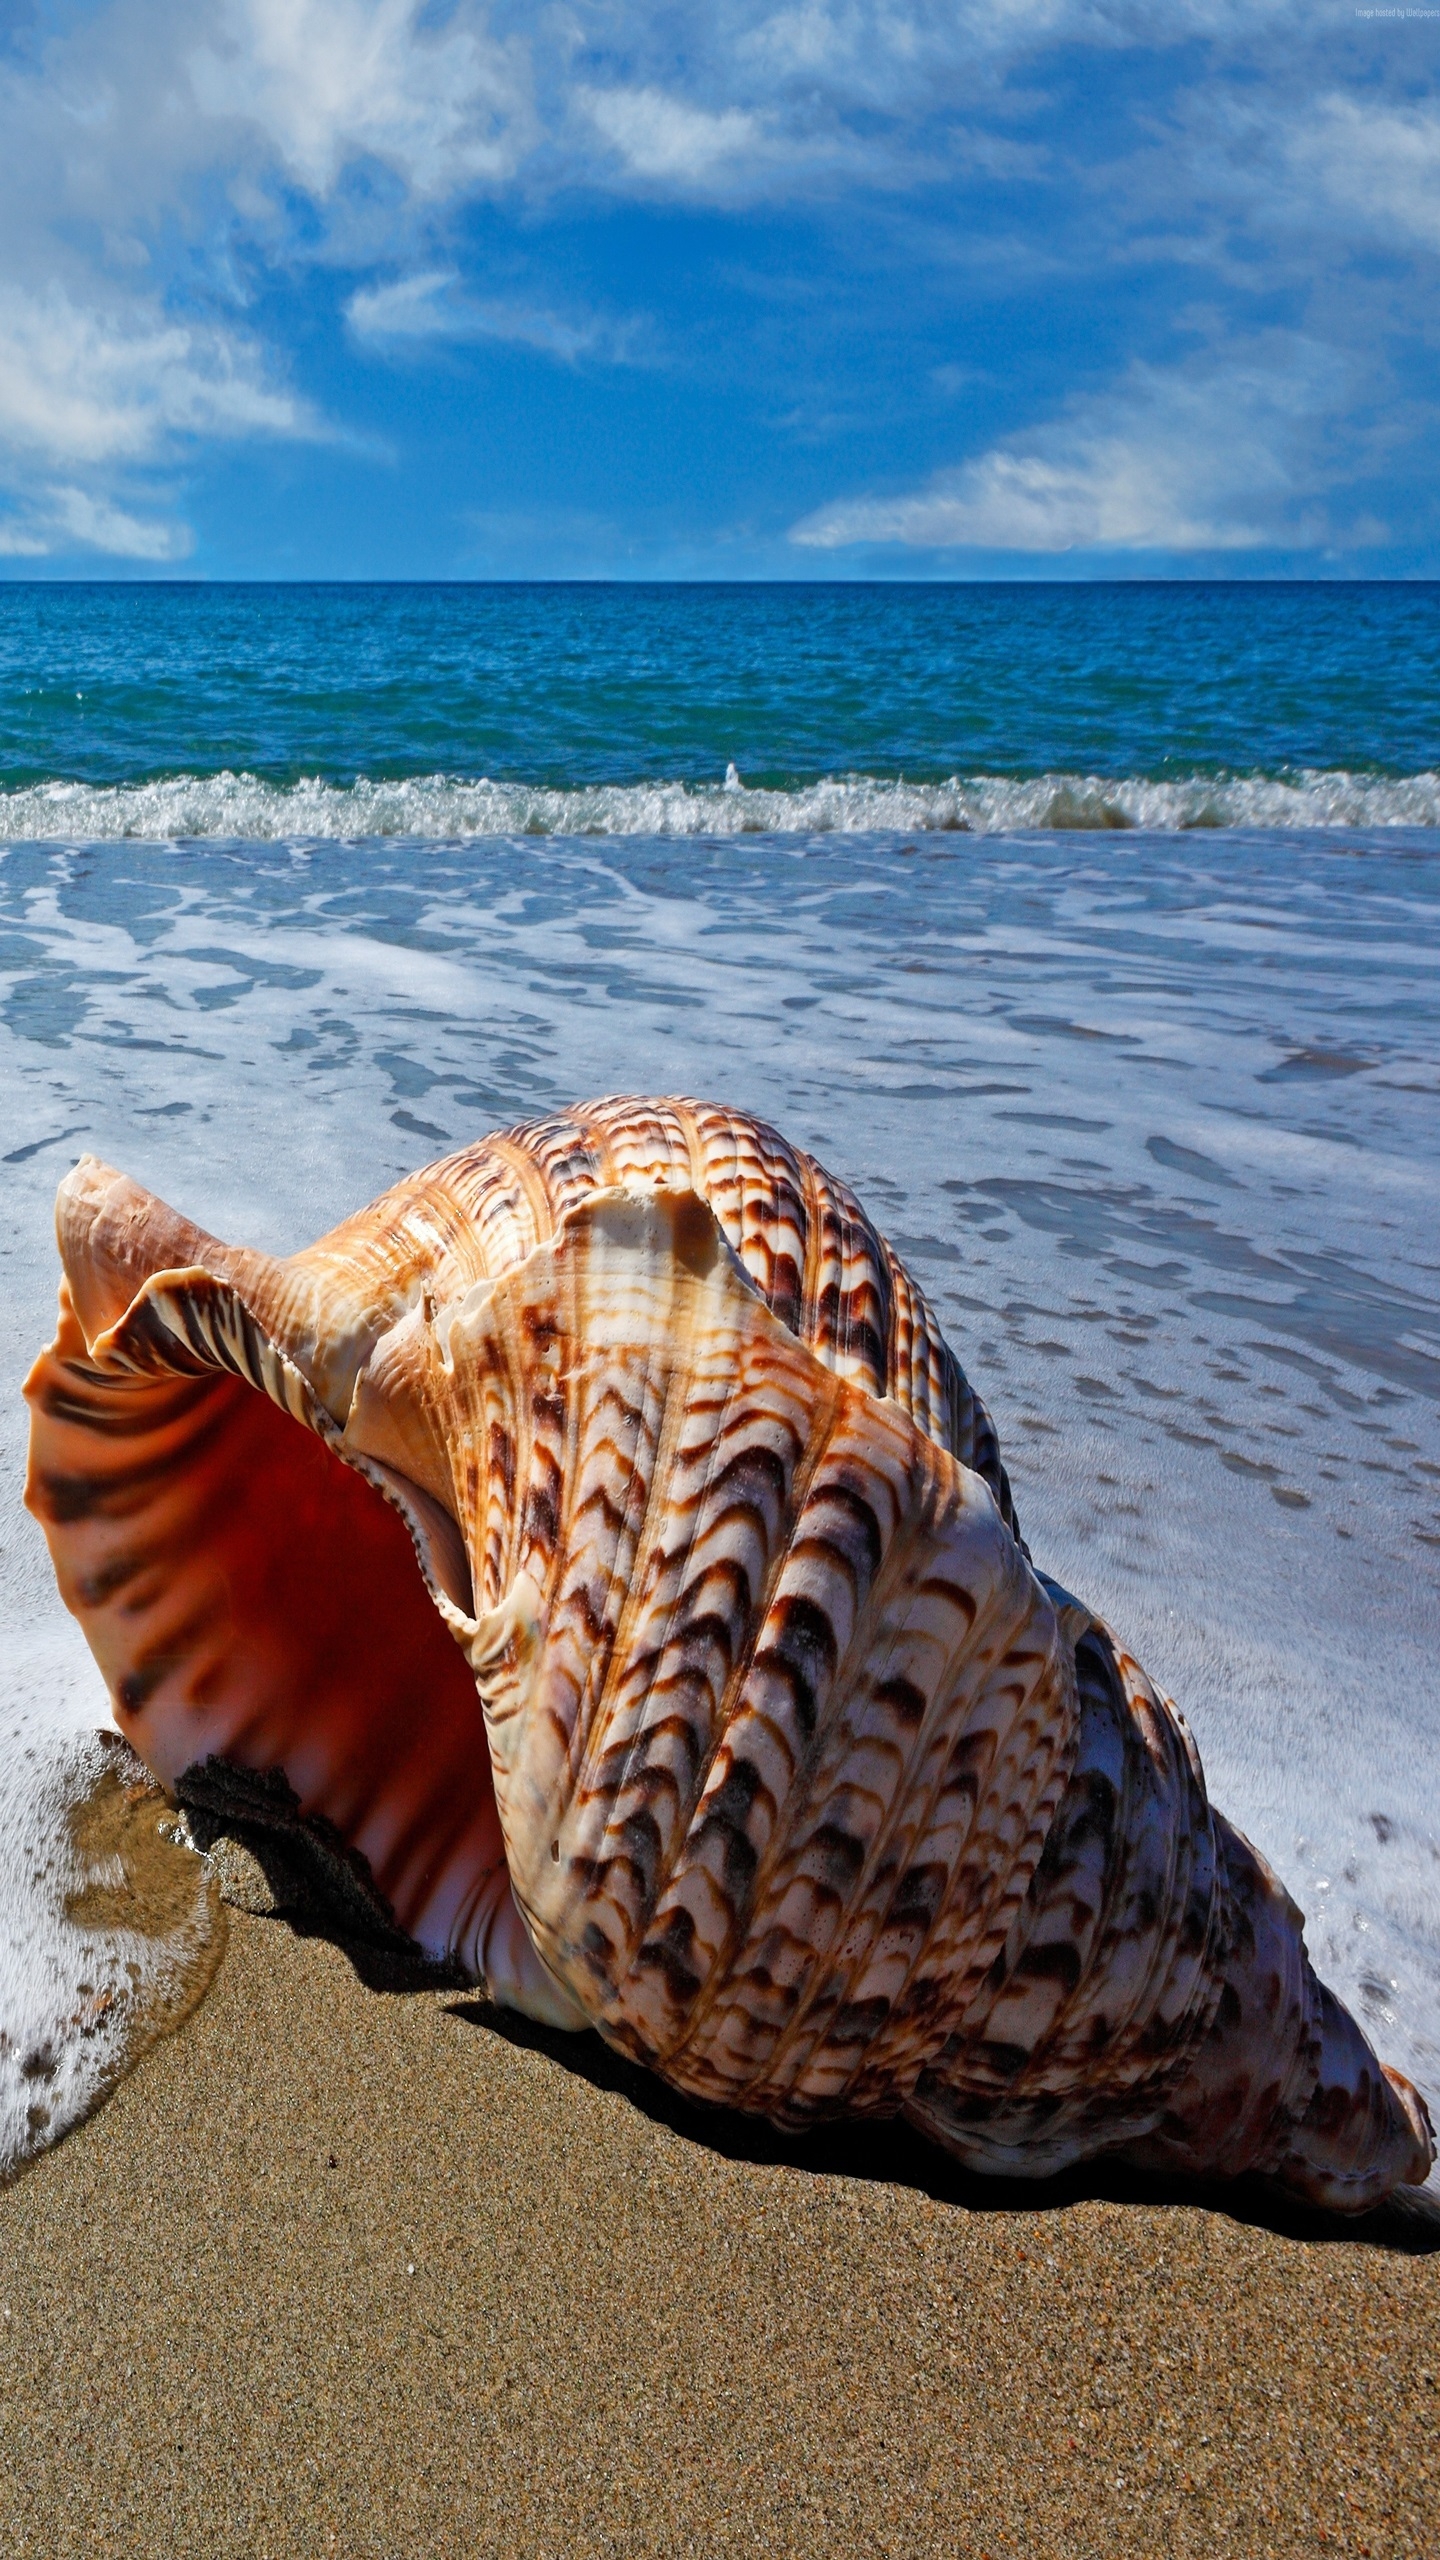 Sea Shell on Sea Shore for Samsung S7 & S7 Edge resolution